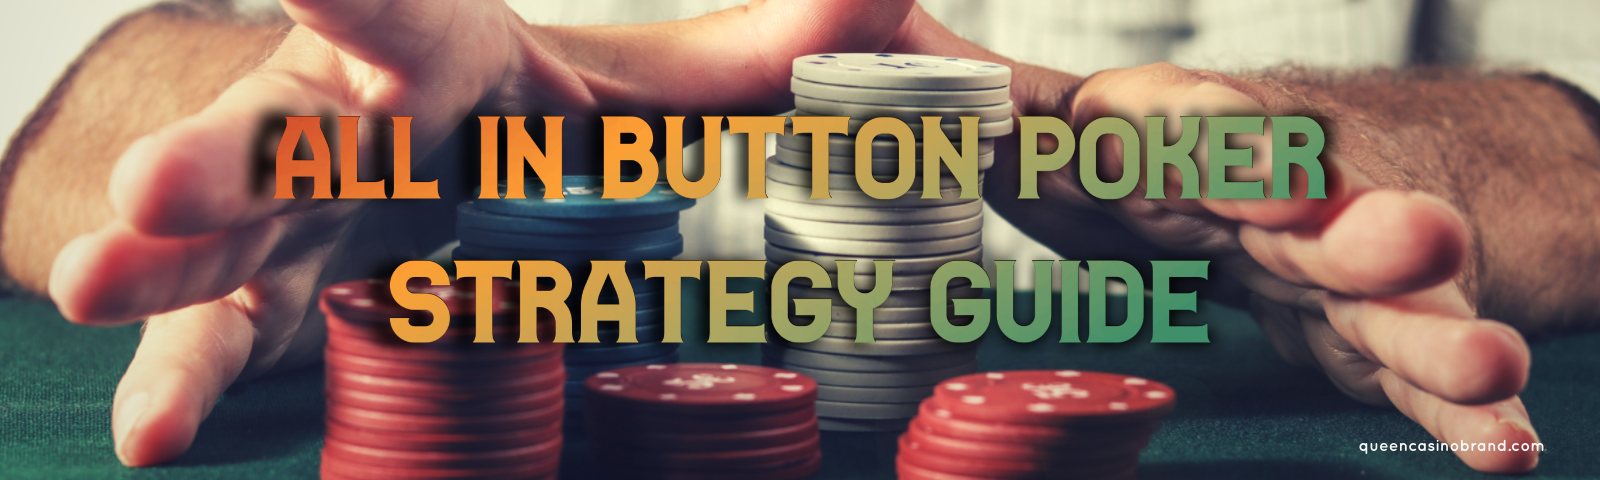 All in Button Poker Strategy Guide | Queen Casino Brand